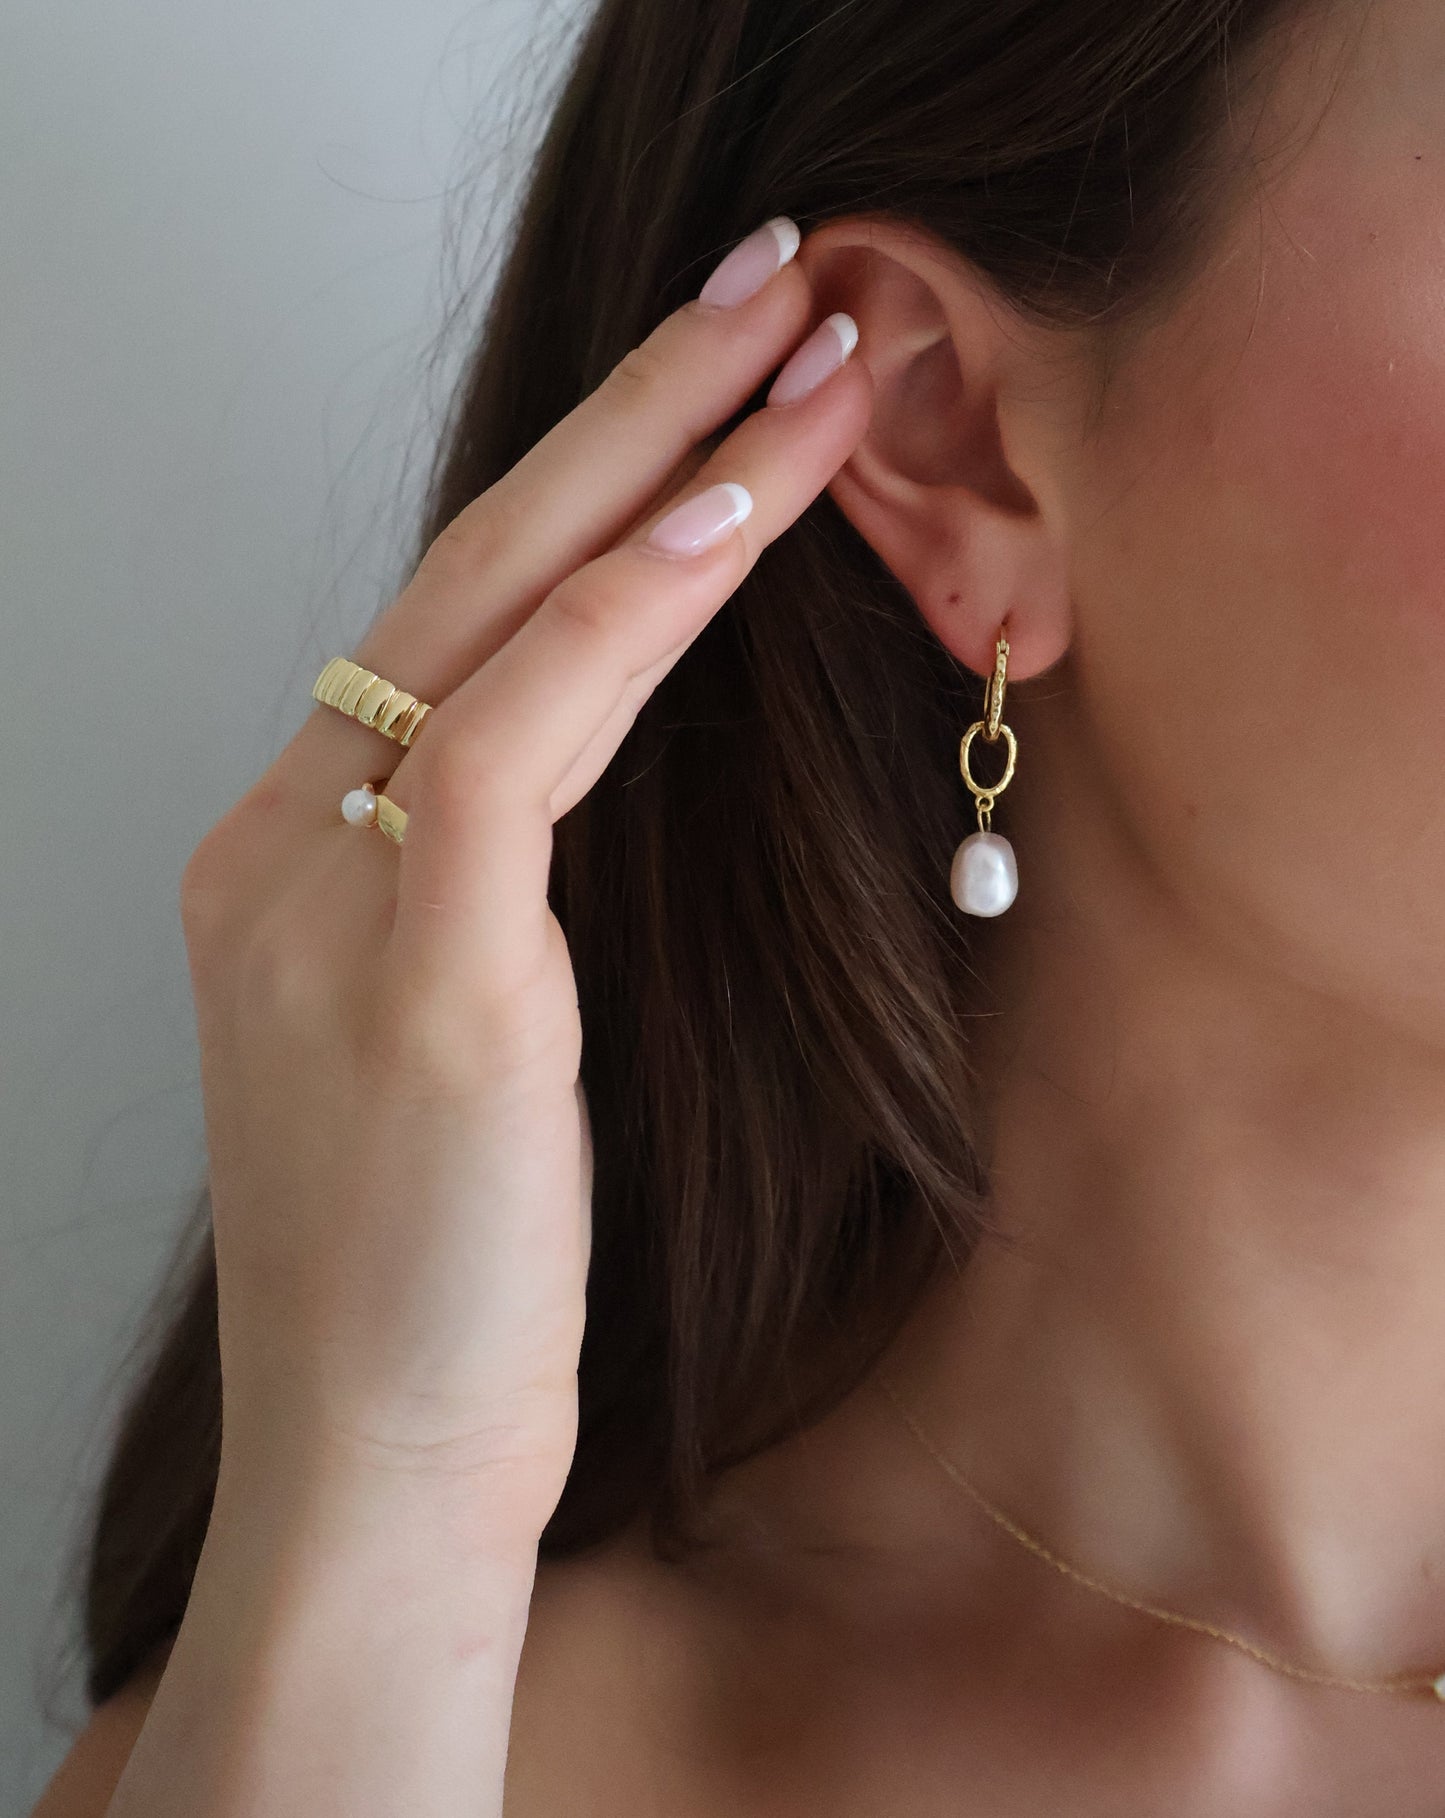 Portsea earrings